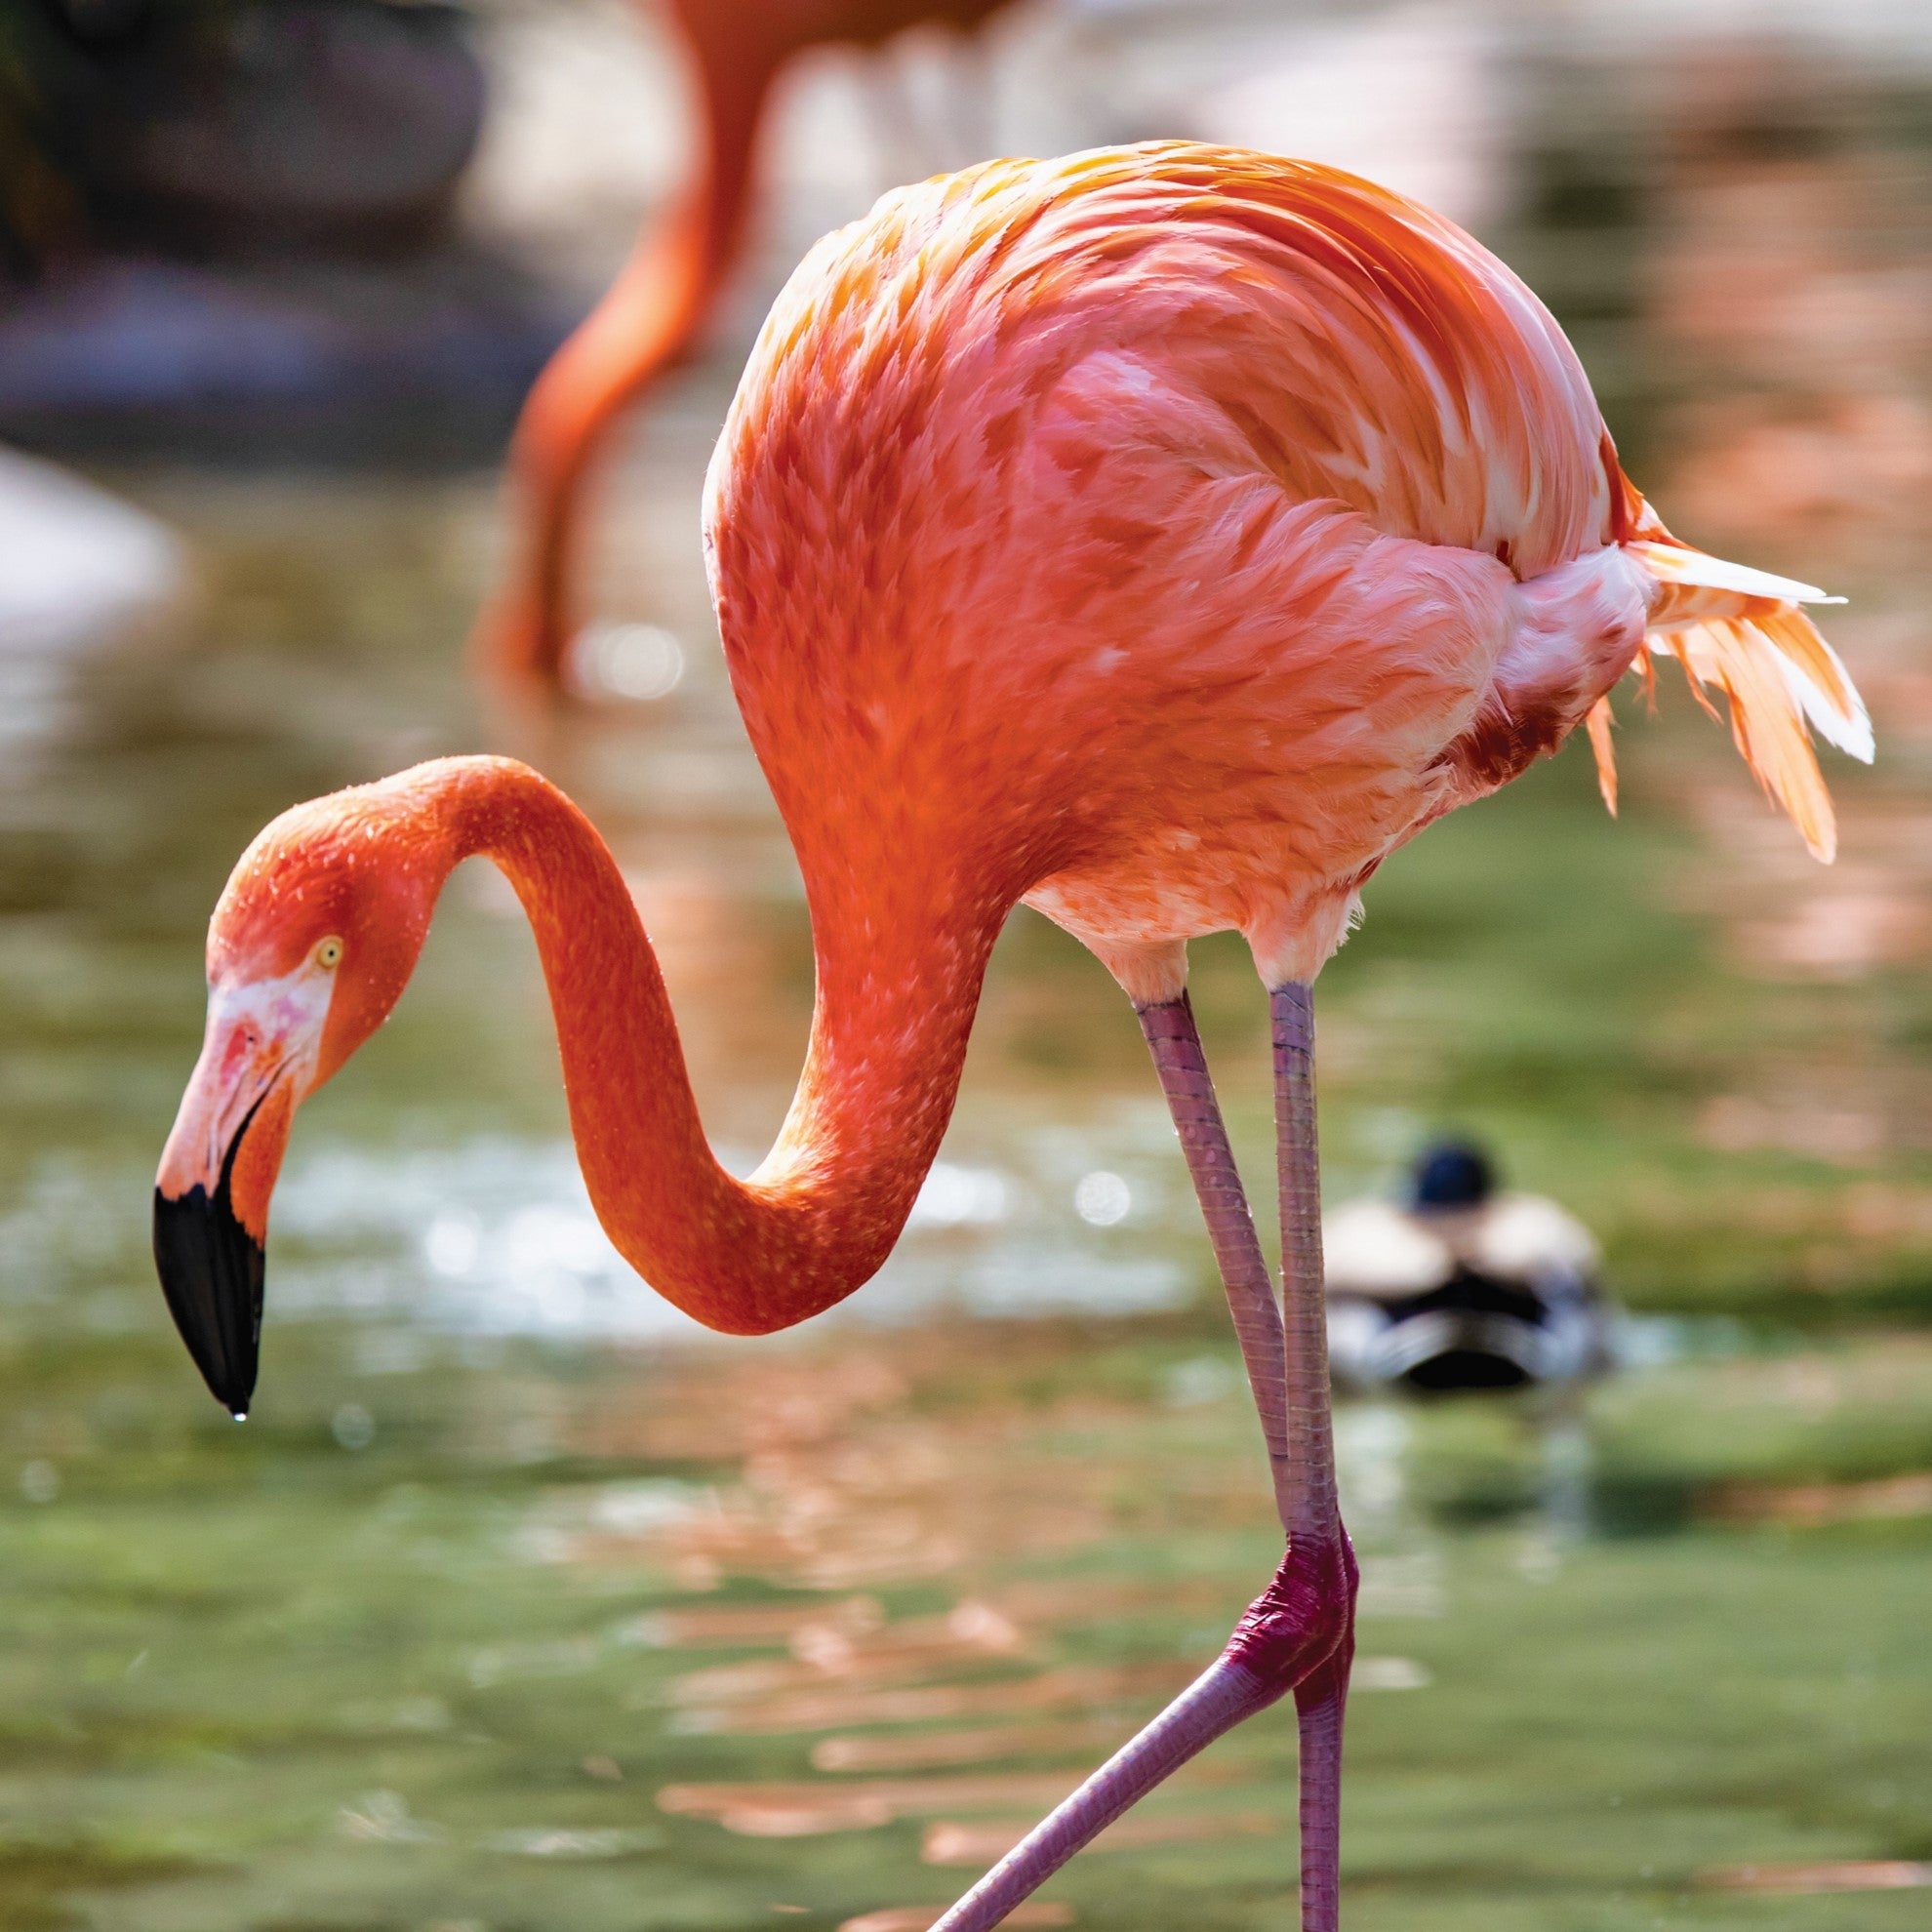 Flamingo - WWF-Canada